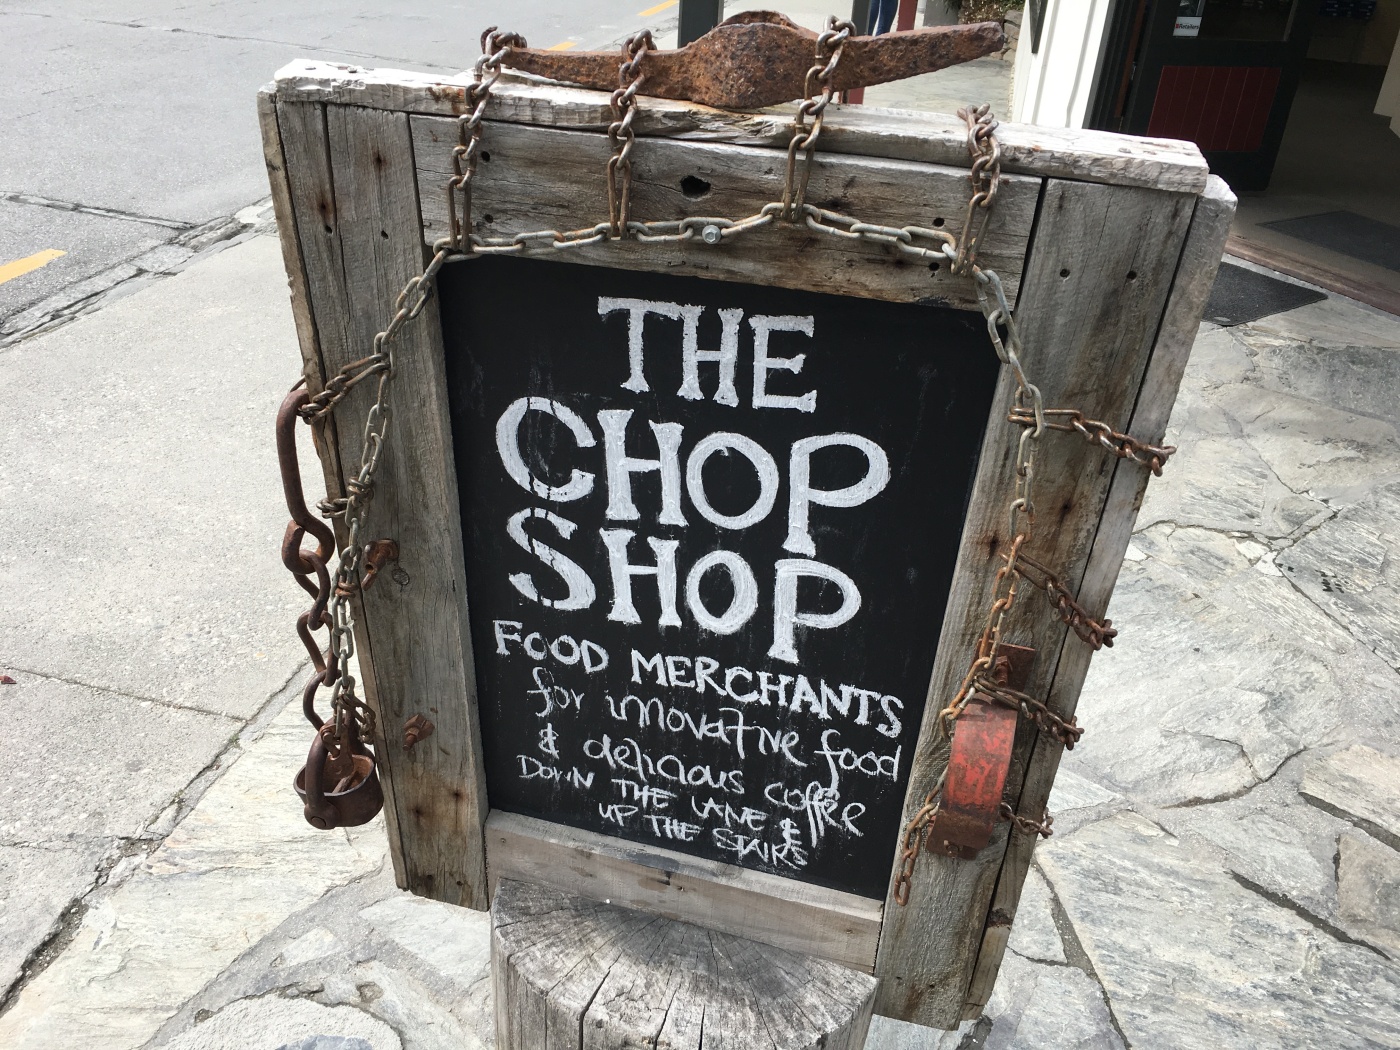 Innovative Grub at The Chop Shop Food Merchants in Arrowtown, New Zealand